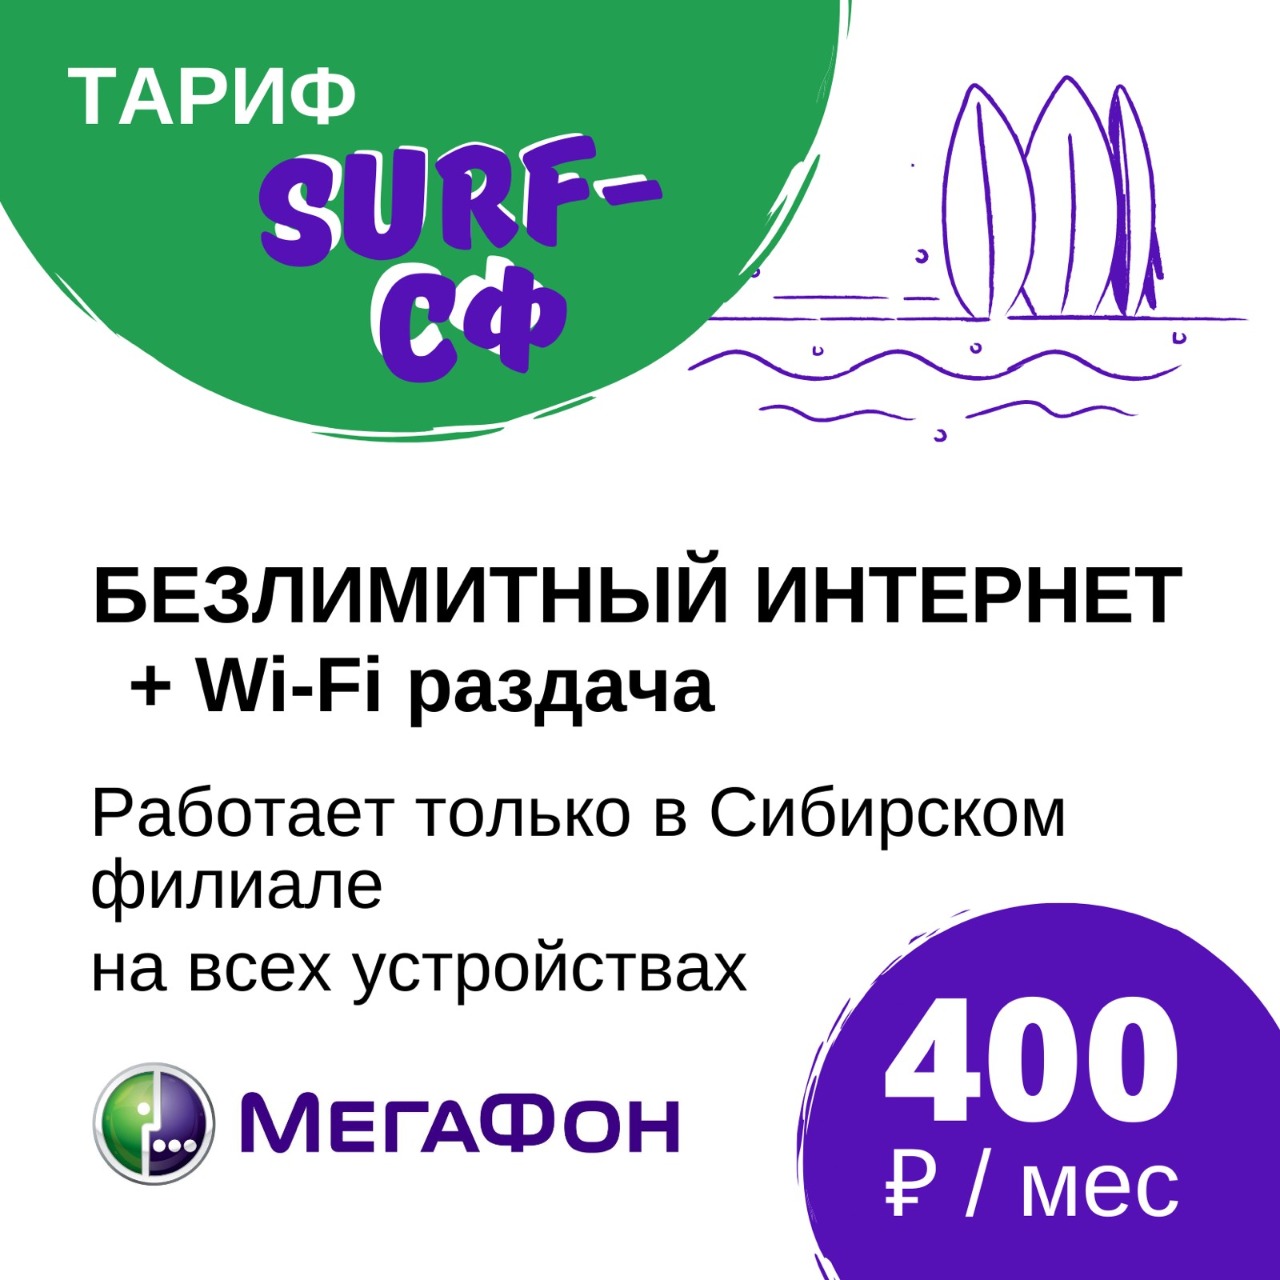 Саяногорск Инфо - whatsapp-image-2020-08-21-at-114743.jpeg, Скачано: 468